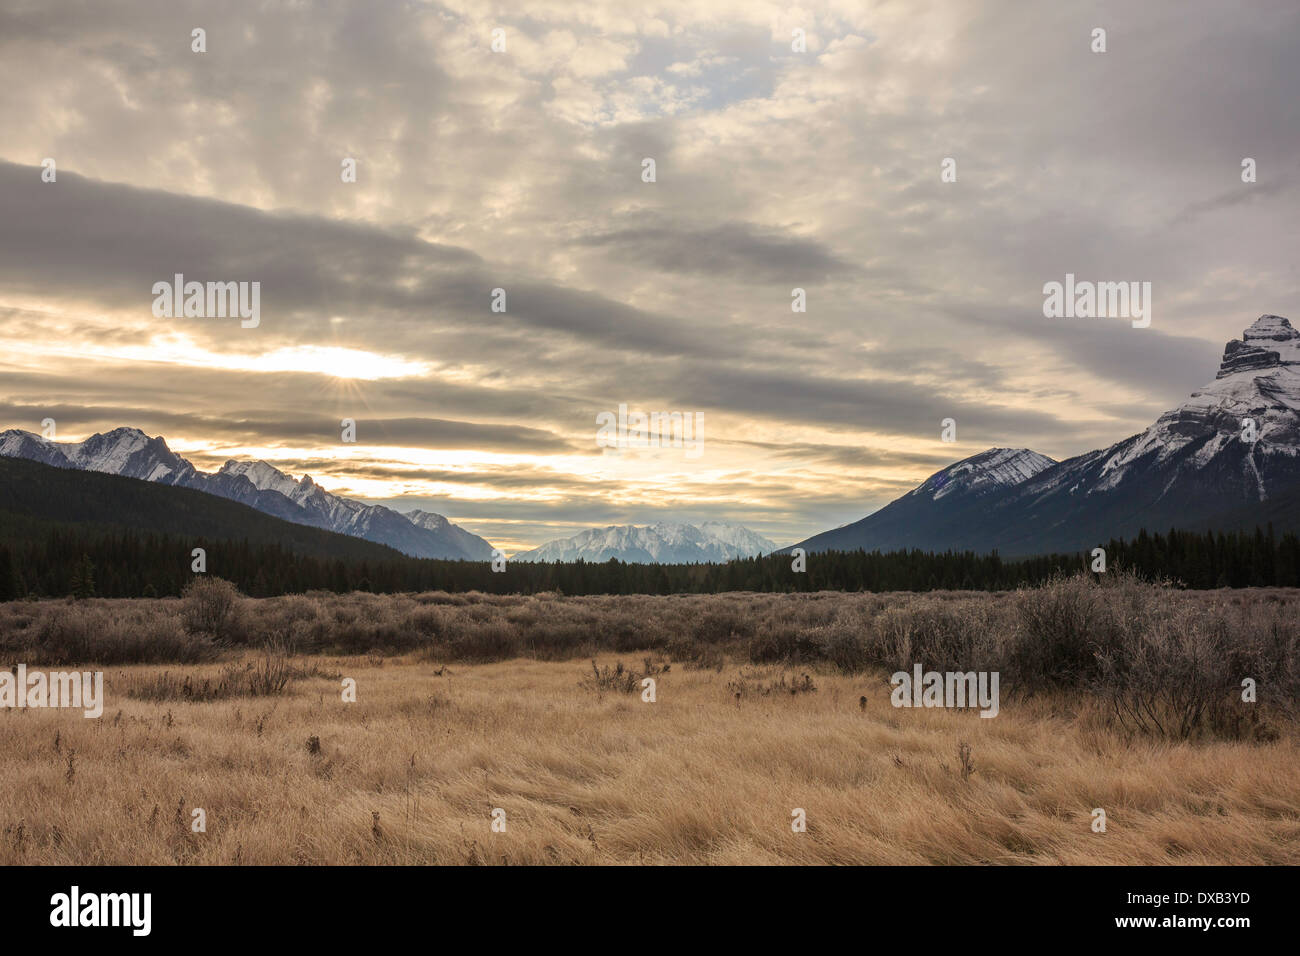 A mountainous landscape at sunrise in Banff, Alberta Canada Stock Photo